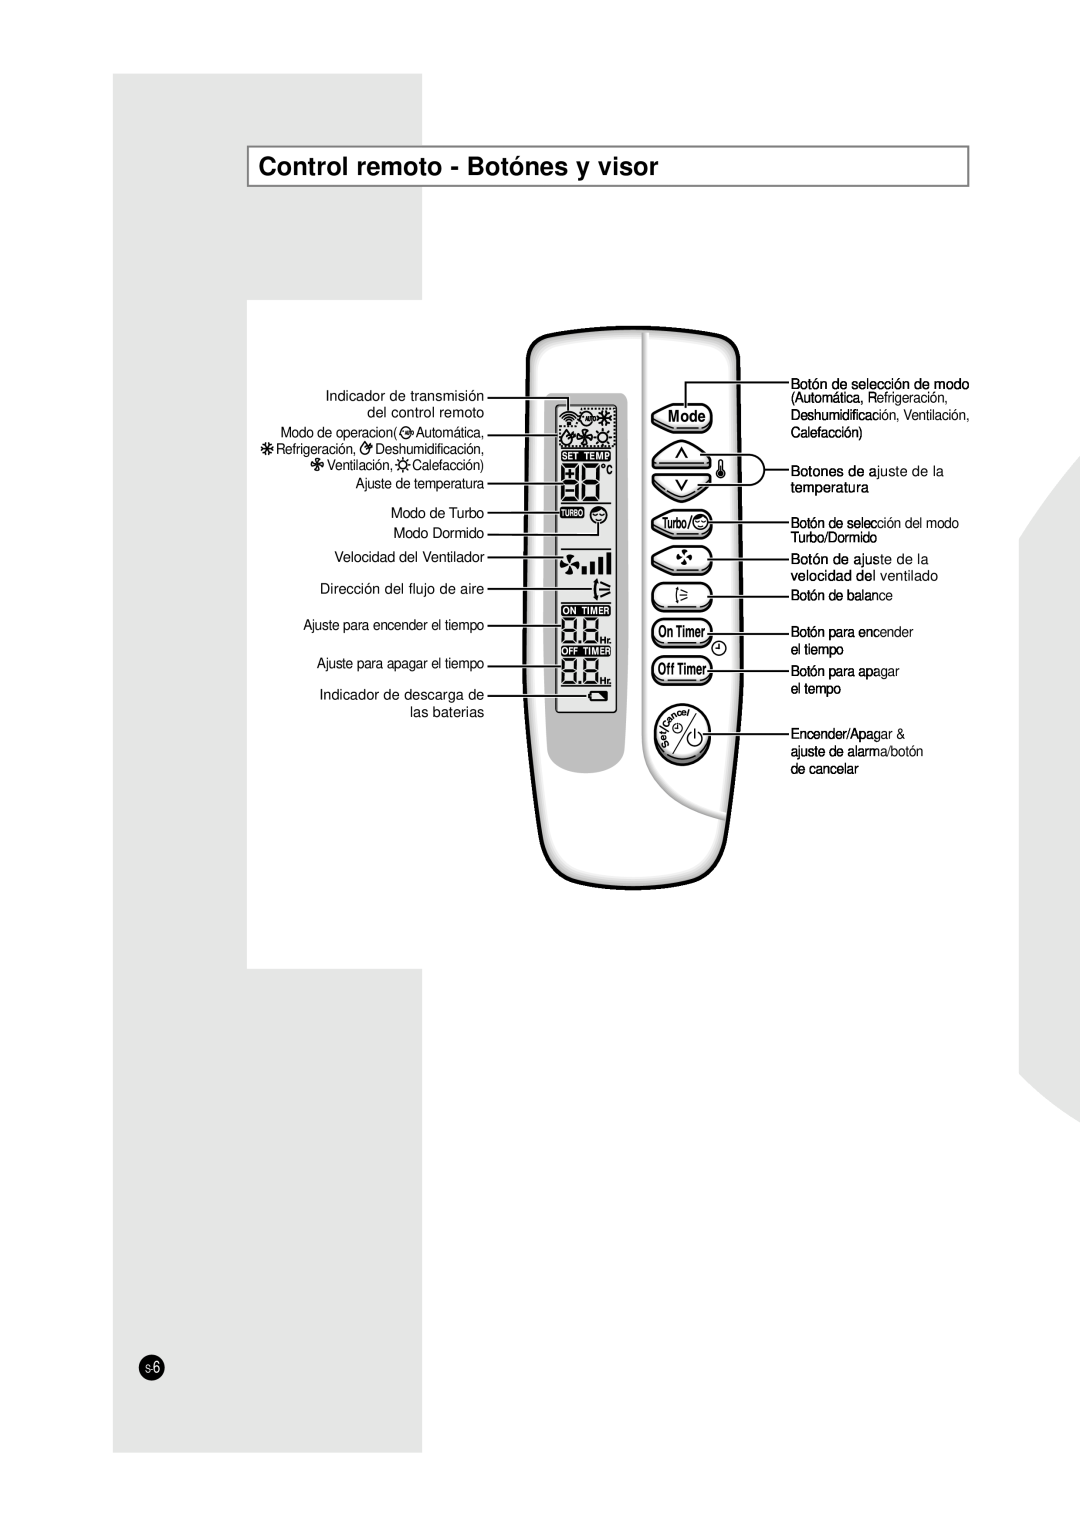 Samsung SH12YA1, SH12YA9, SH12UA1 manuel dutilisation Control remoto - Botónes y visor 